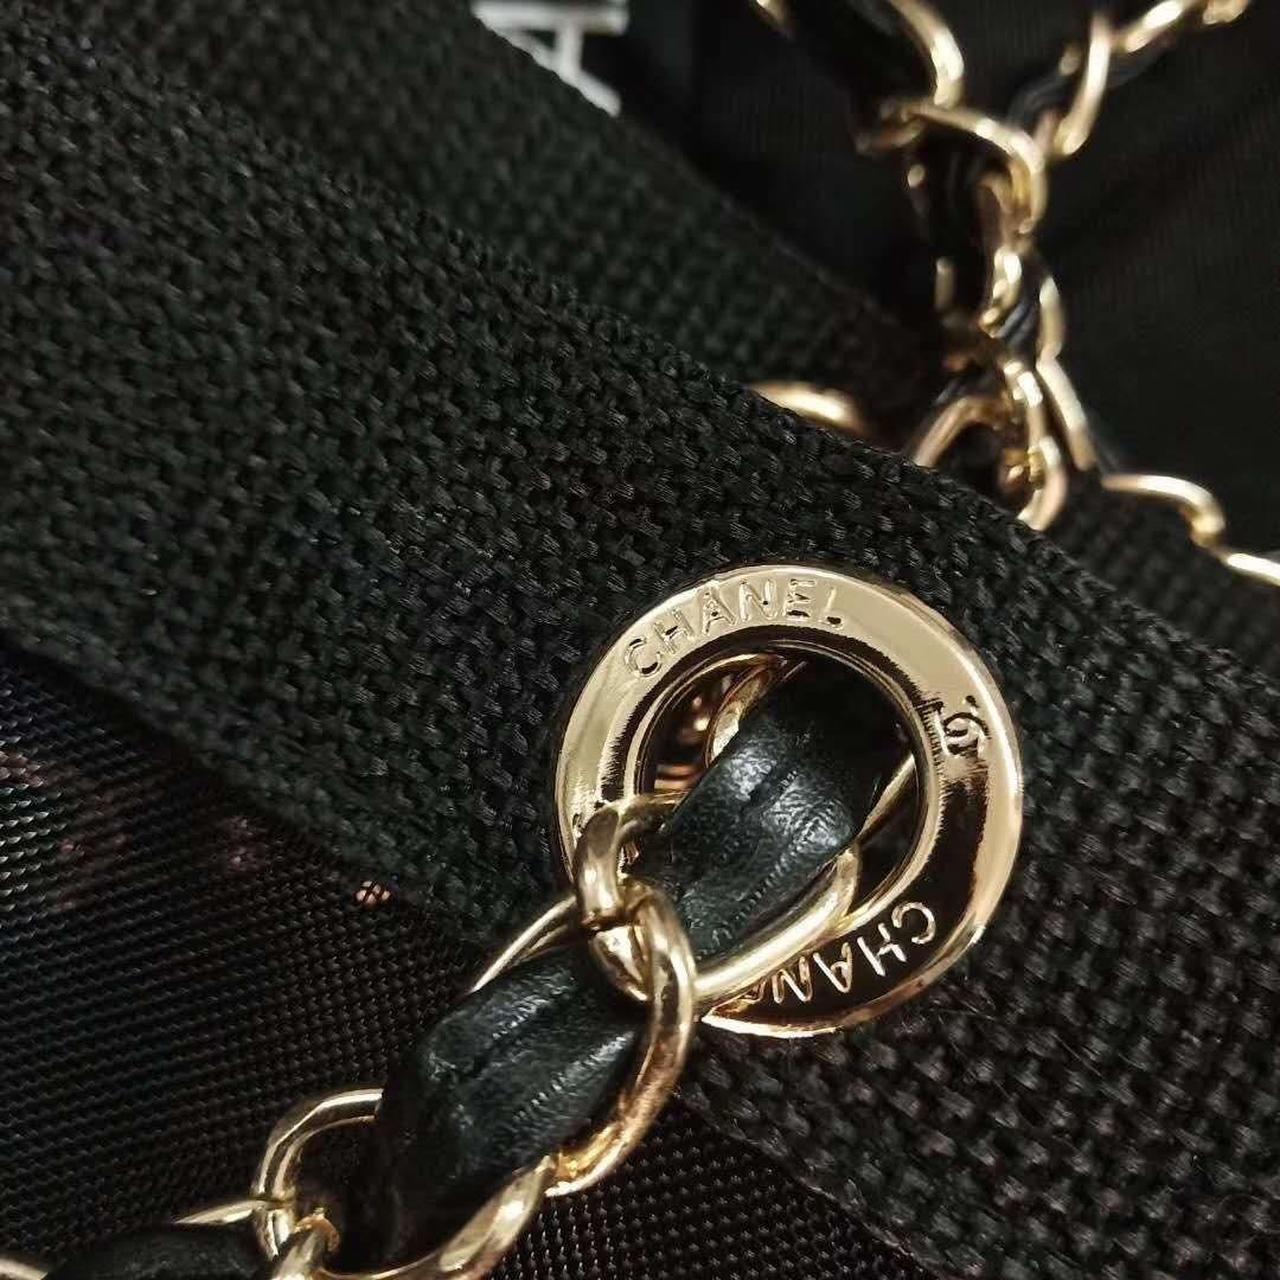 Chanel VIP gift bag / gift for Chanel VIP buyers